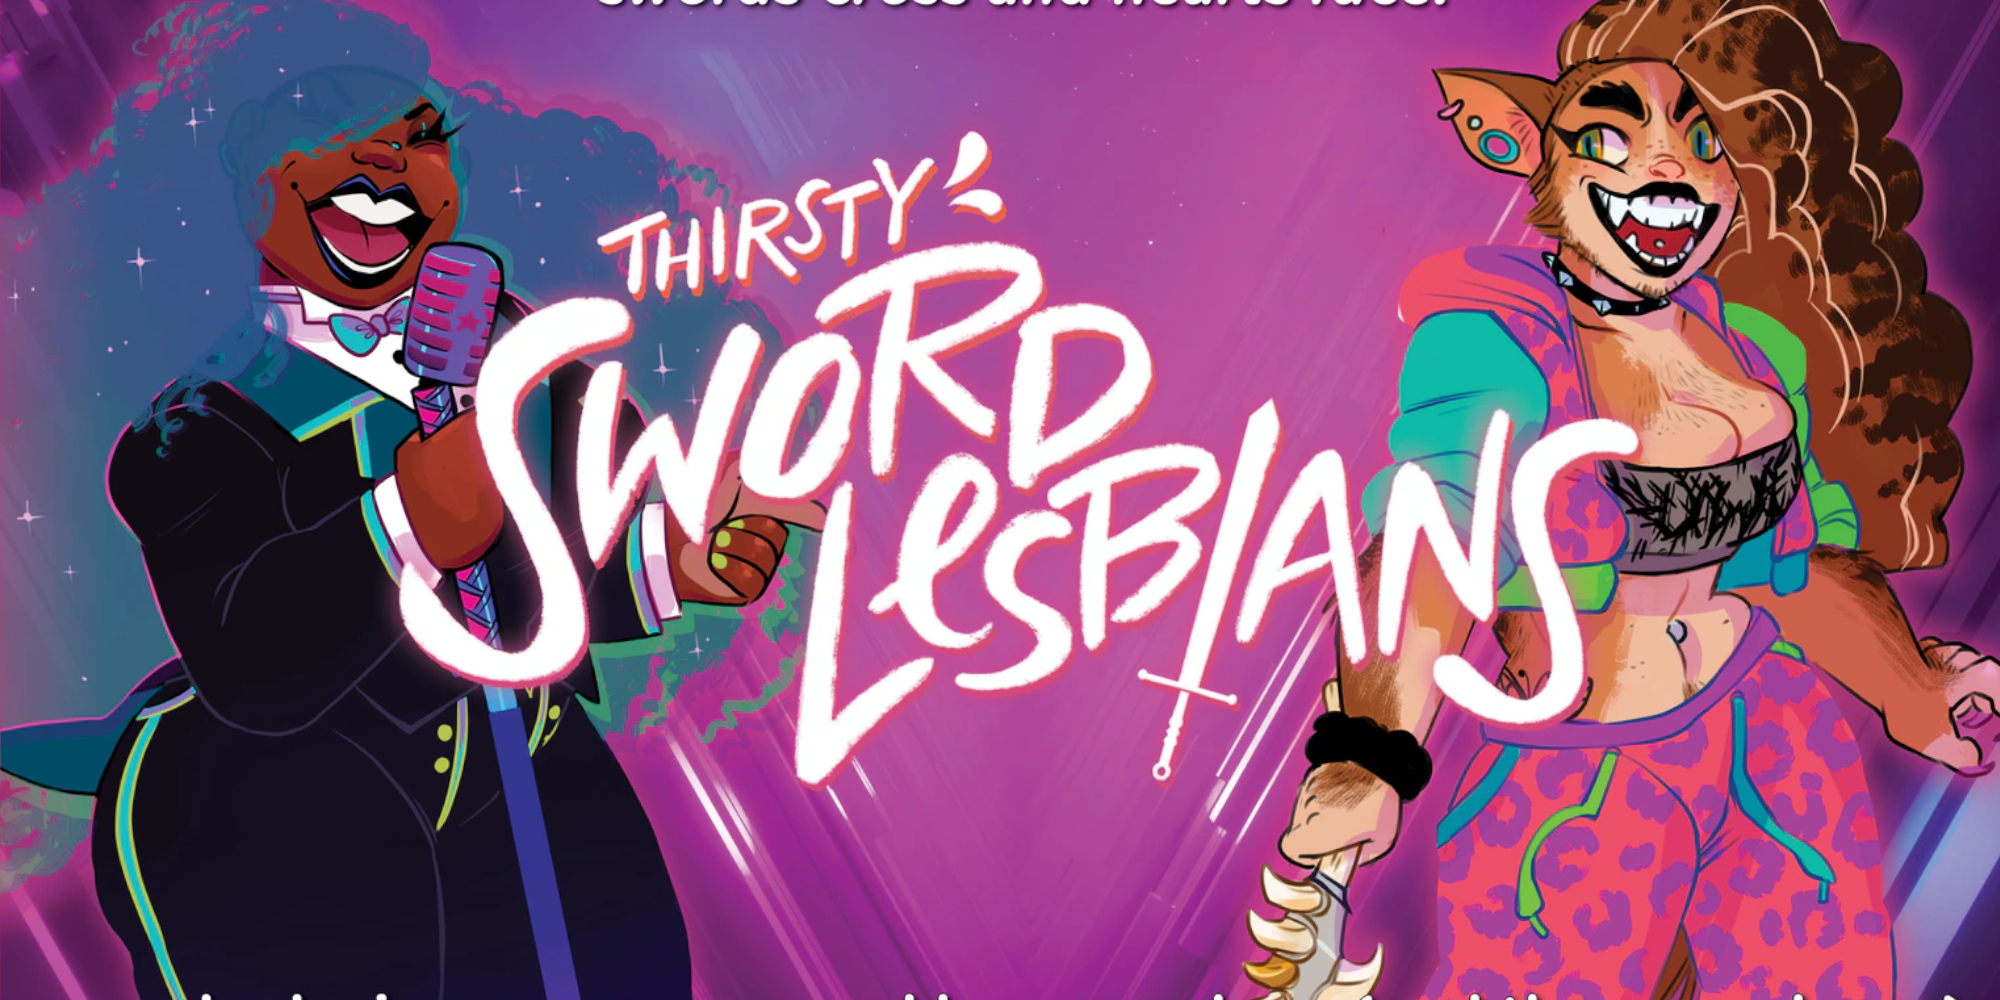 thirsty sword lesbians kickstarter